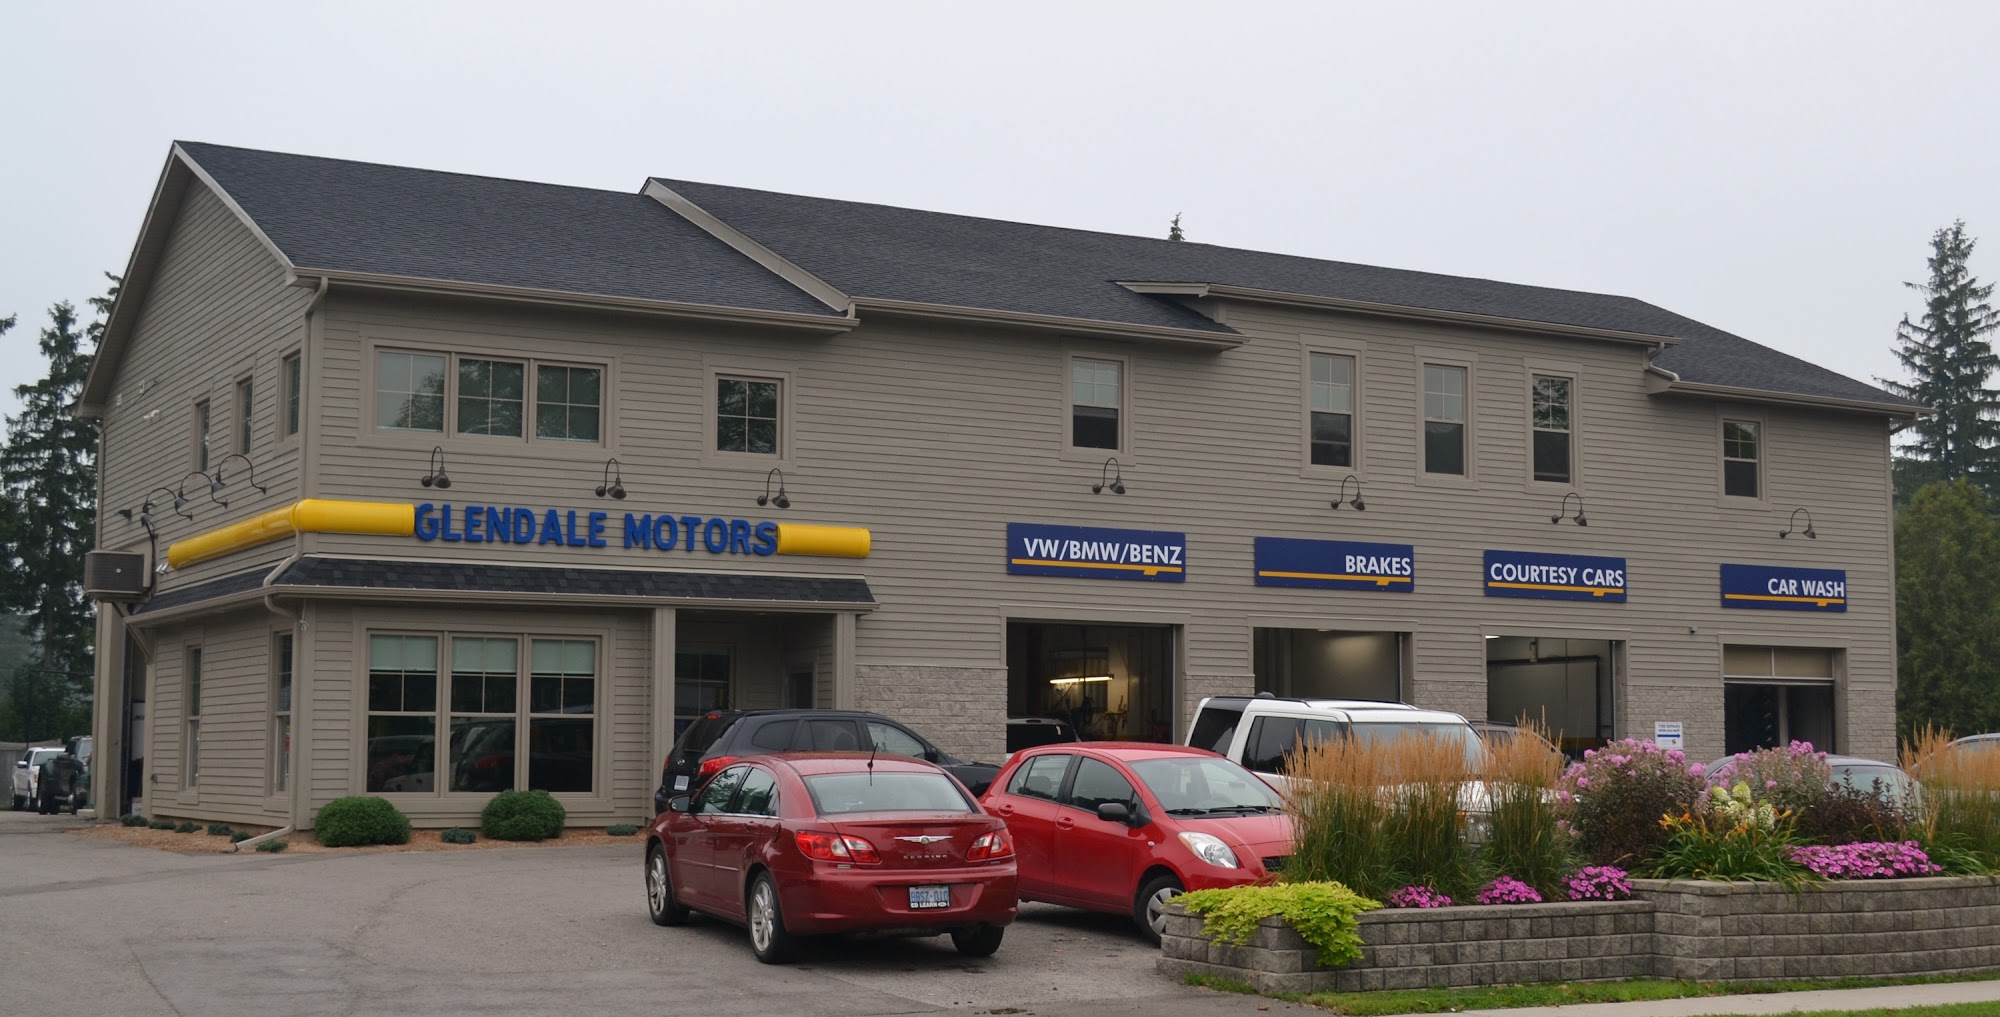 NAPA AUTOPRO - Glendale Motors 407 Wilson St E, Ancaster Ontario L9G 2C4